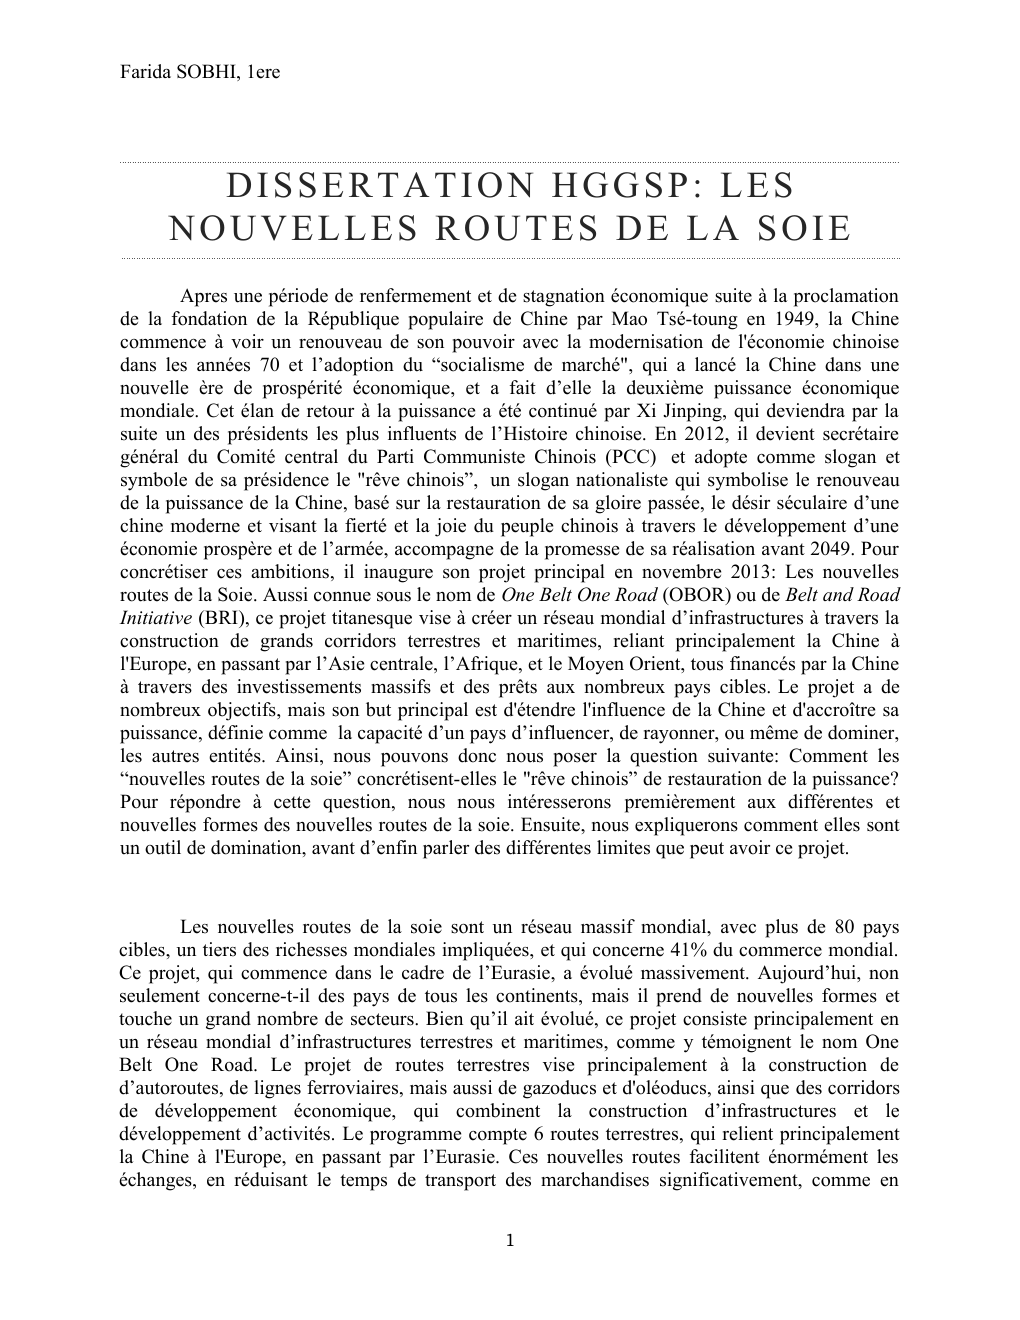 dissertation hggsp environnement